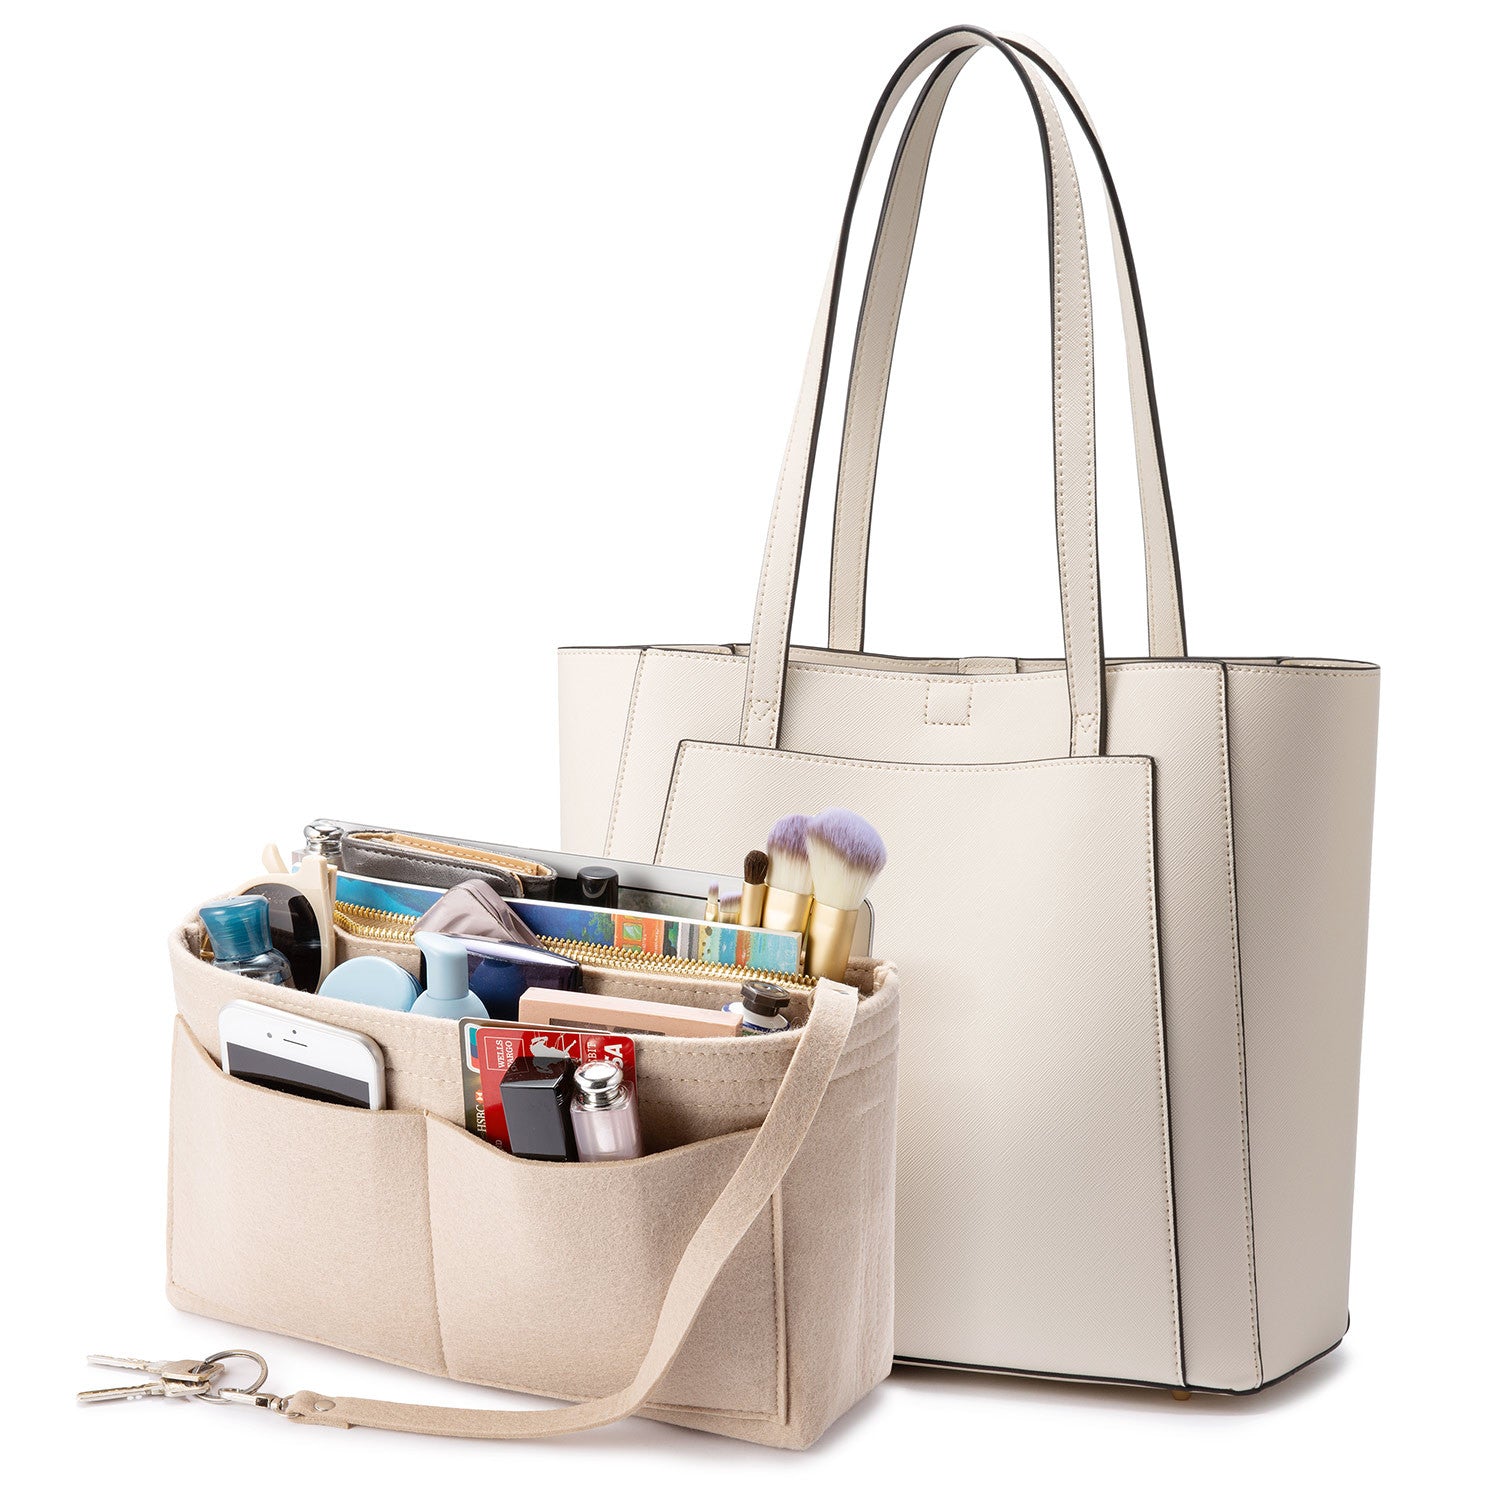 IVK Luxury Women's Brand Handheld Tote Bags Hot Selling Temperament Versatile Middle Aged Mom Bag